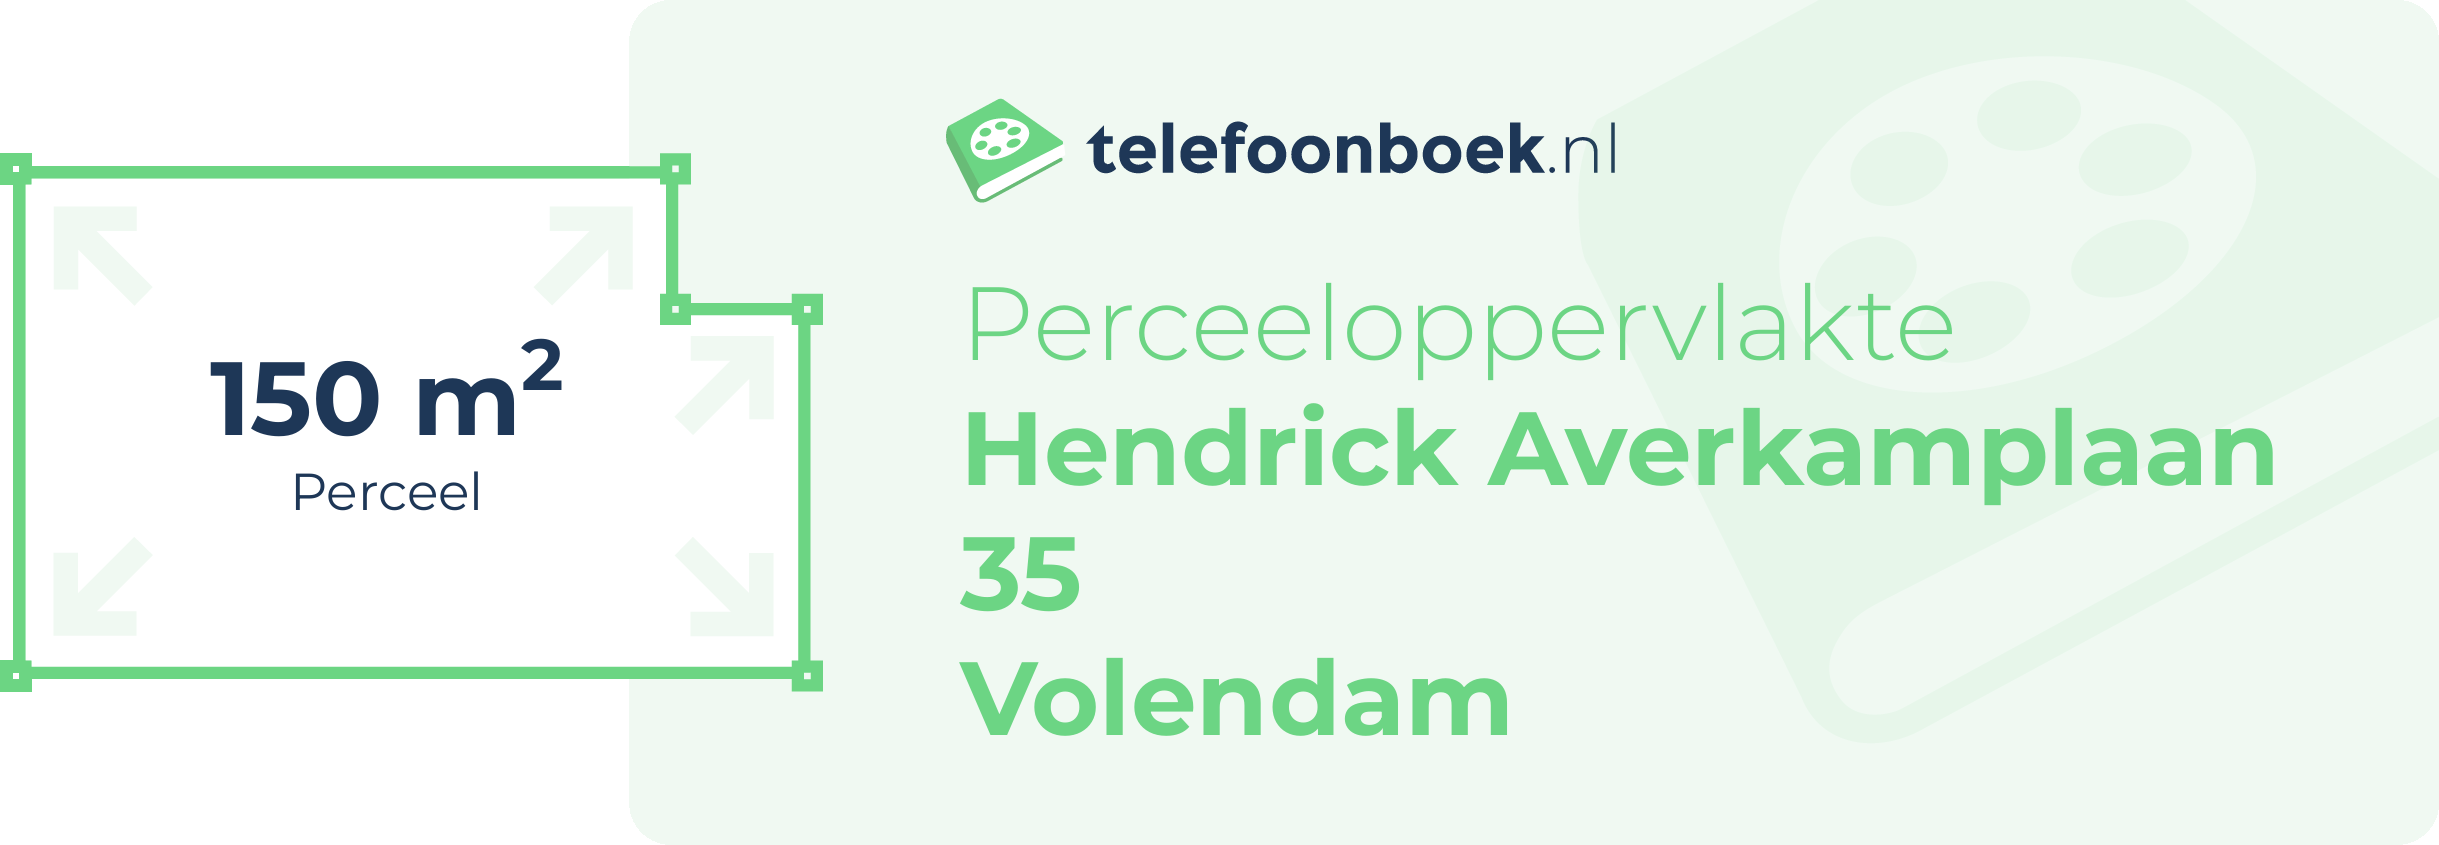 Perceeloppervlakte Hendrick Averkamplaan 35 Volendam